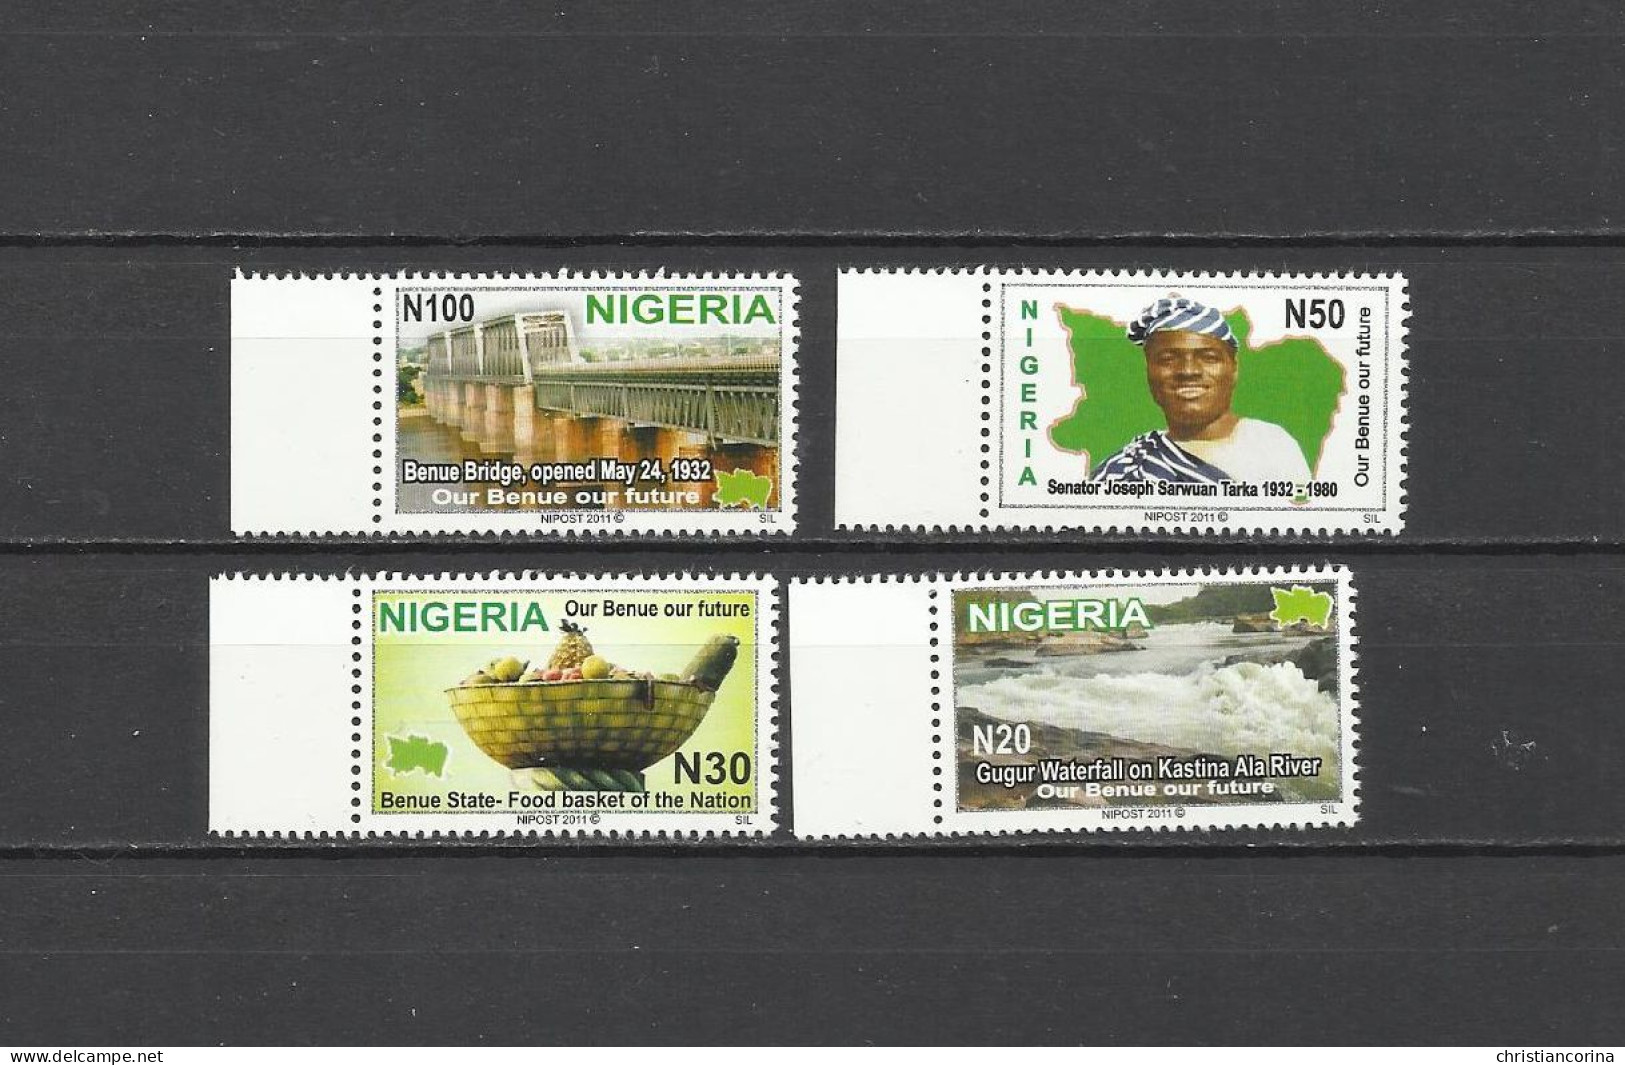 NIGERIA 2011 25 YEARS BENUE STATE - Nigeria (1961-...)